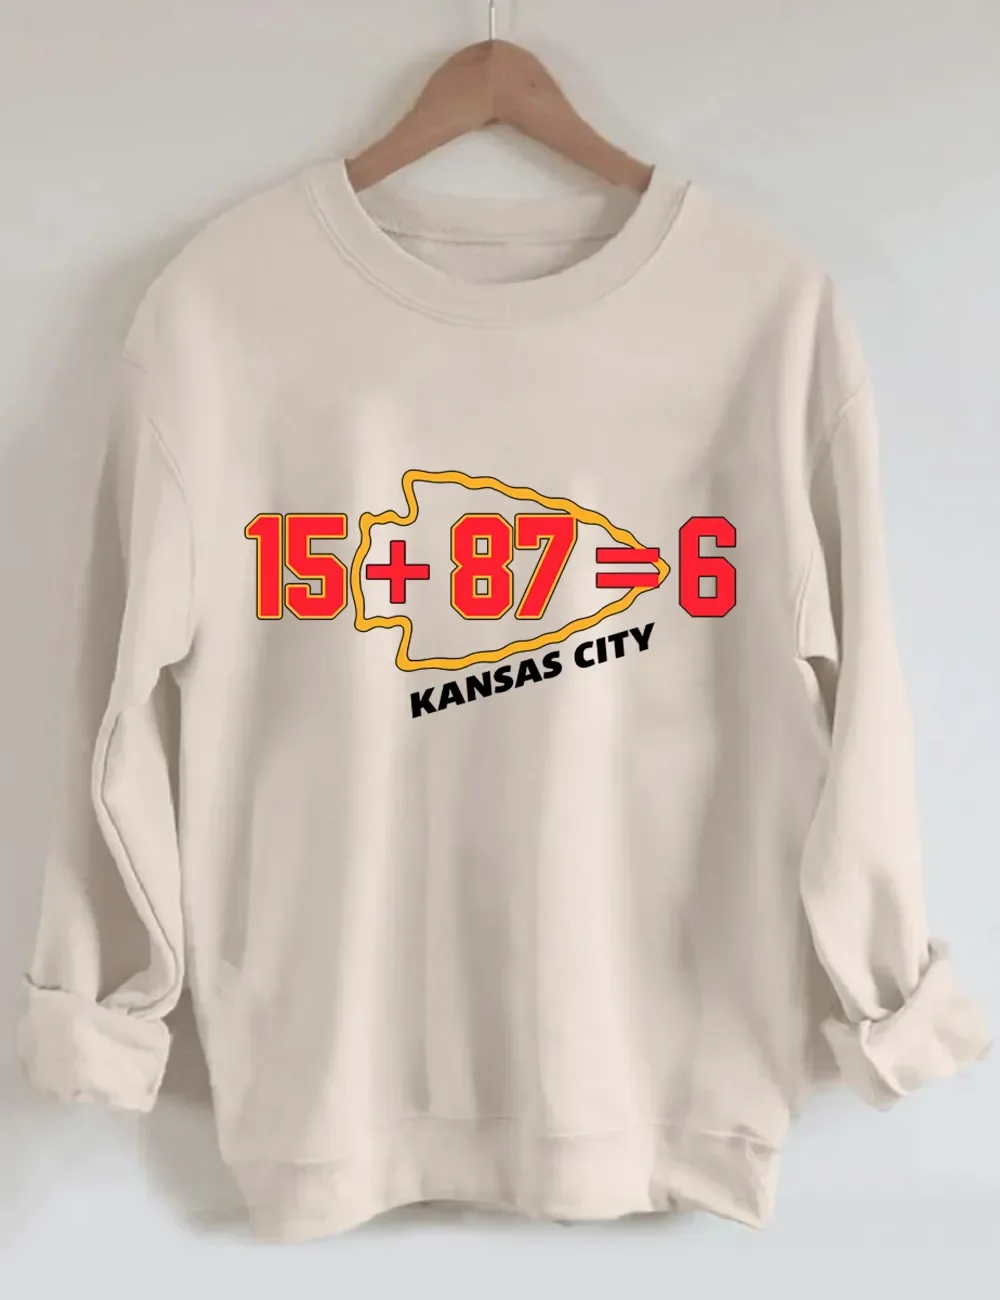 Kansas City Chiefs Football Sweatshirt